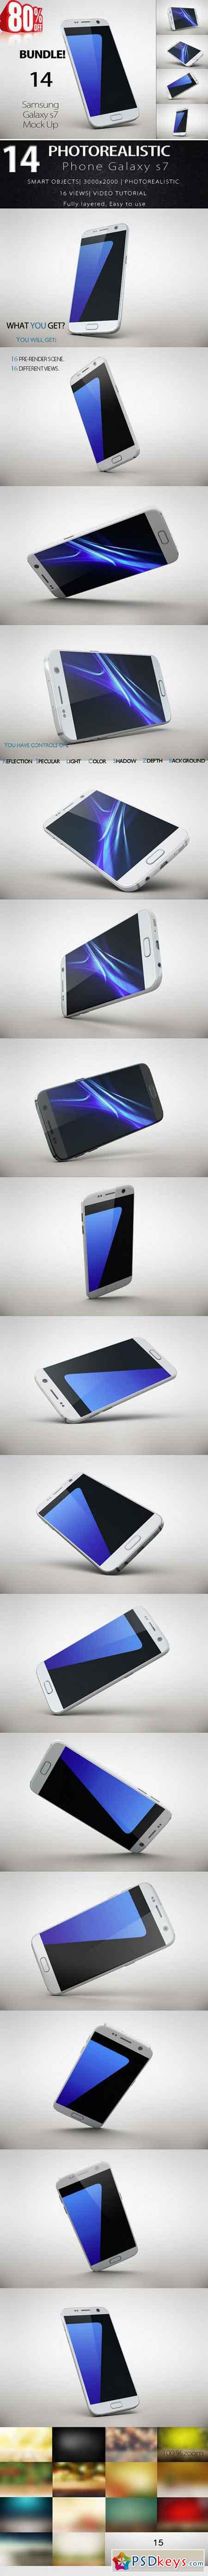 Bundle Samsung Galaxy s7 MockUp 773604